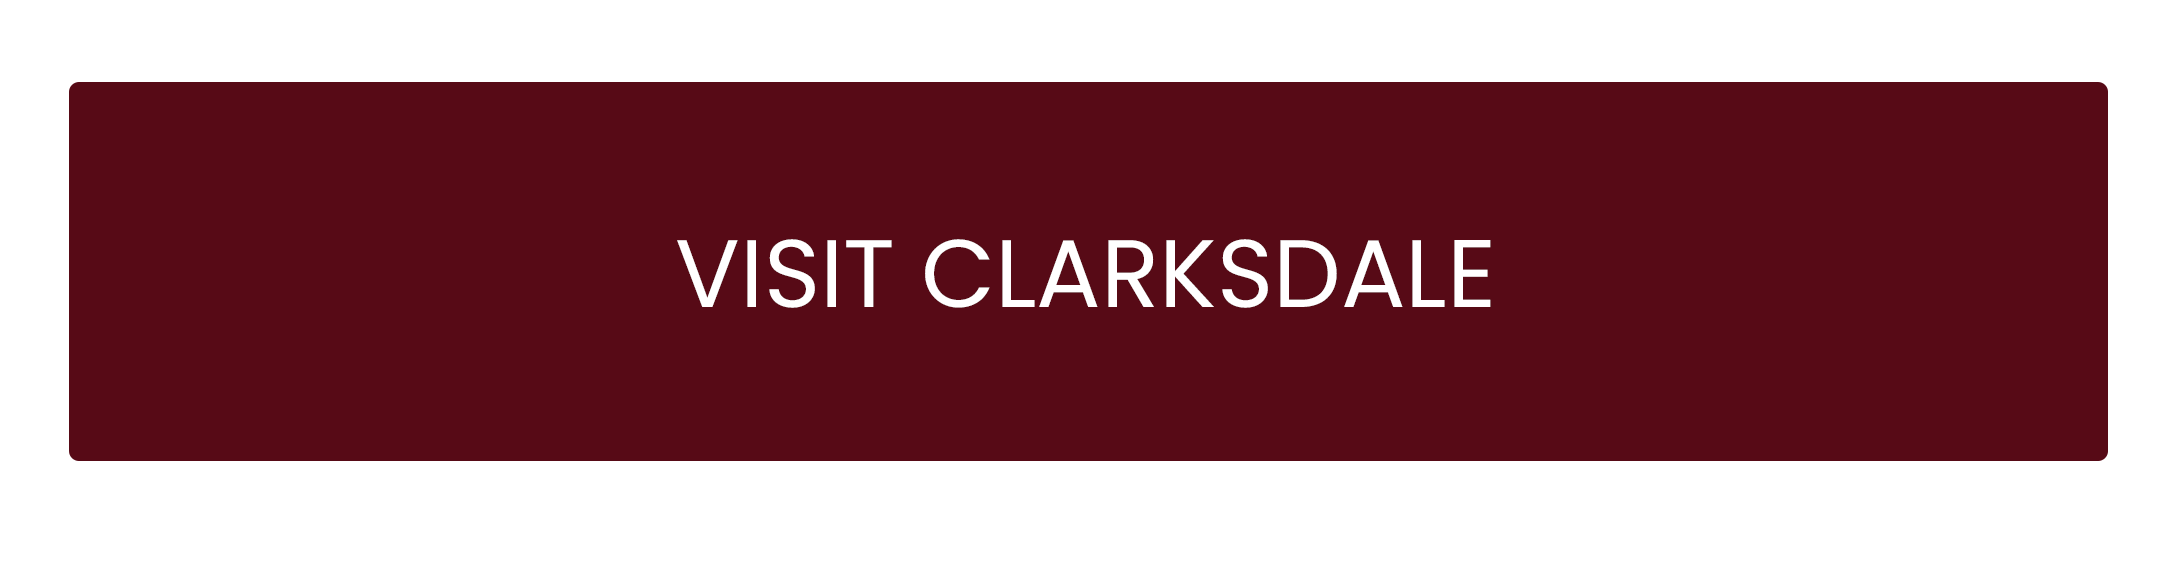 Visit Clarksdale